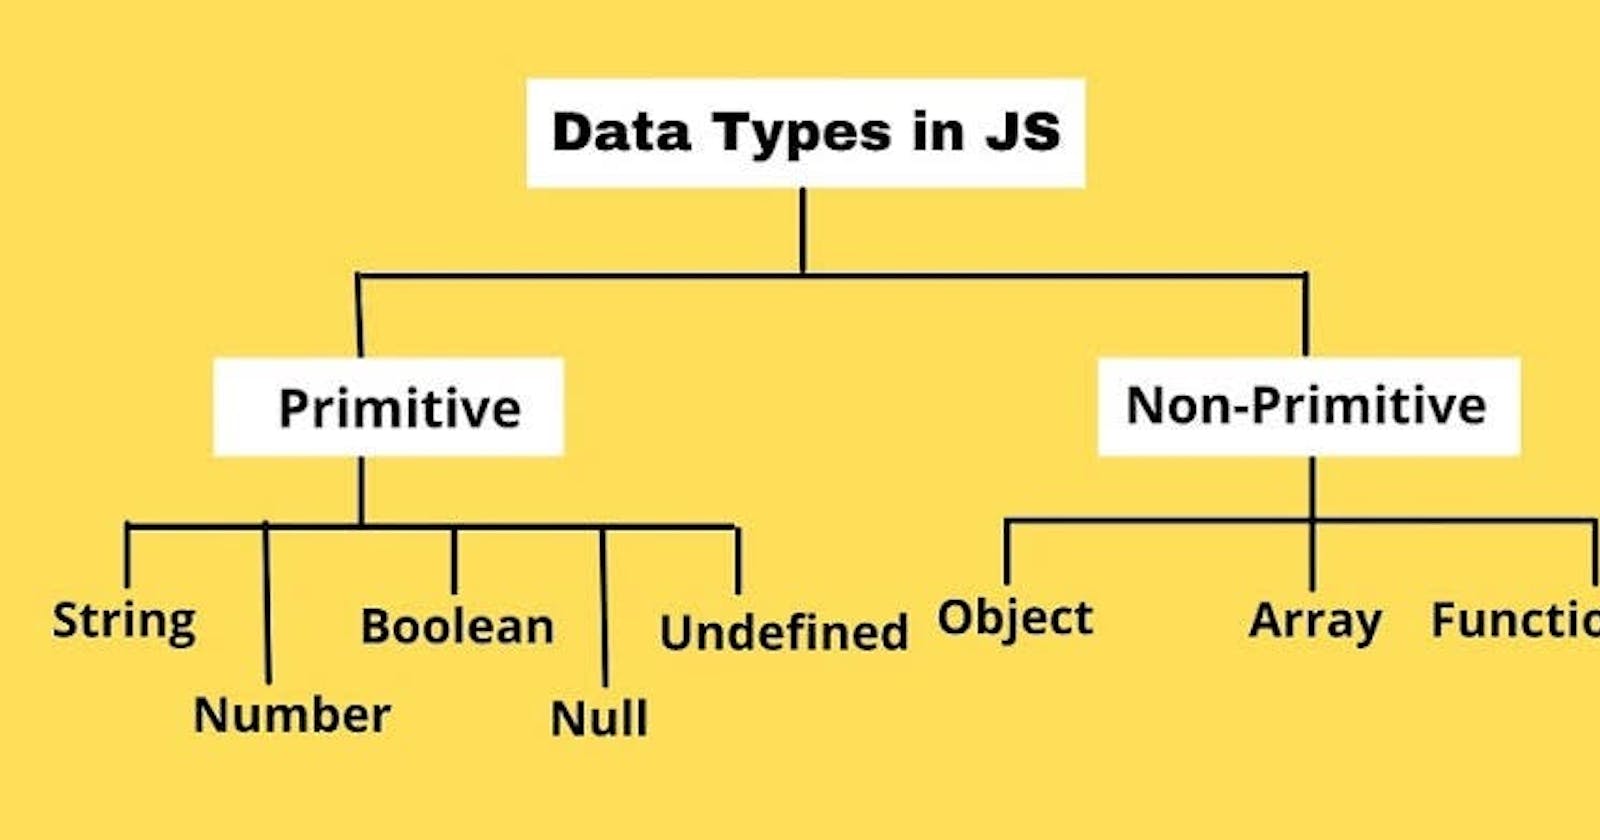 Non-Primitive Data Types in JavaScript